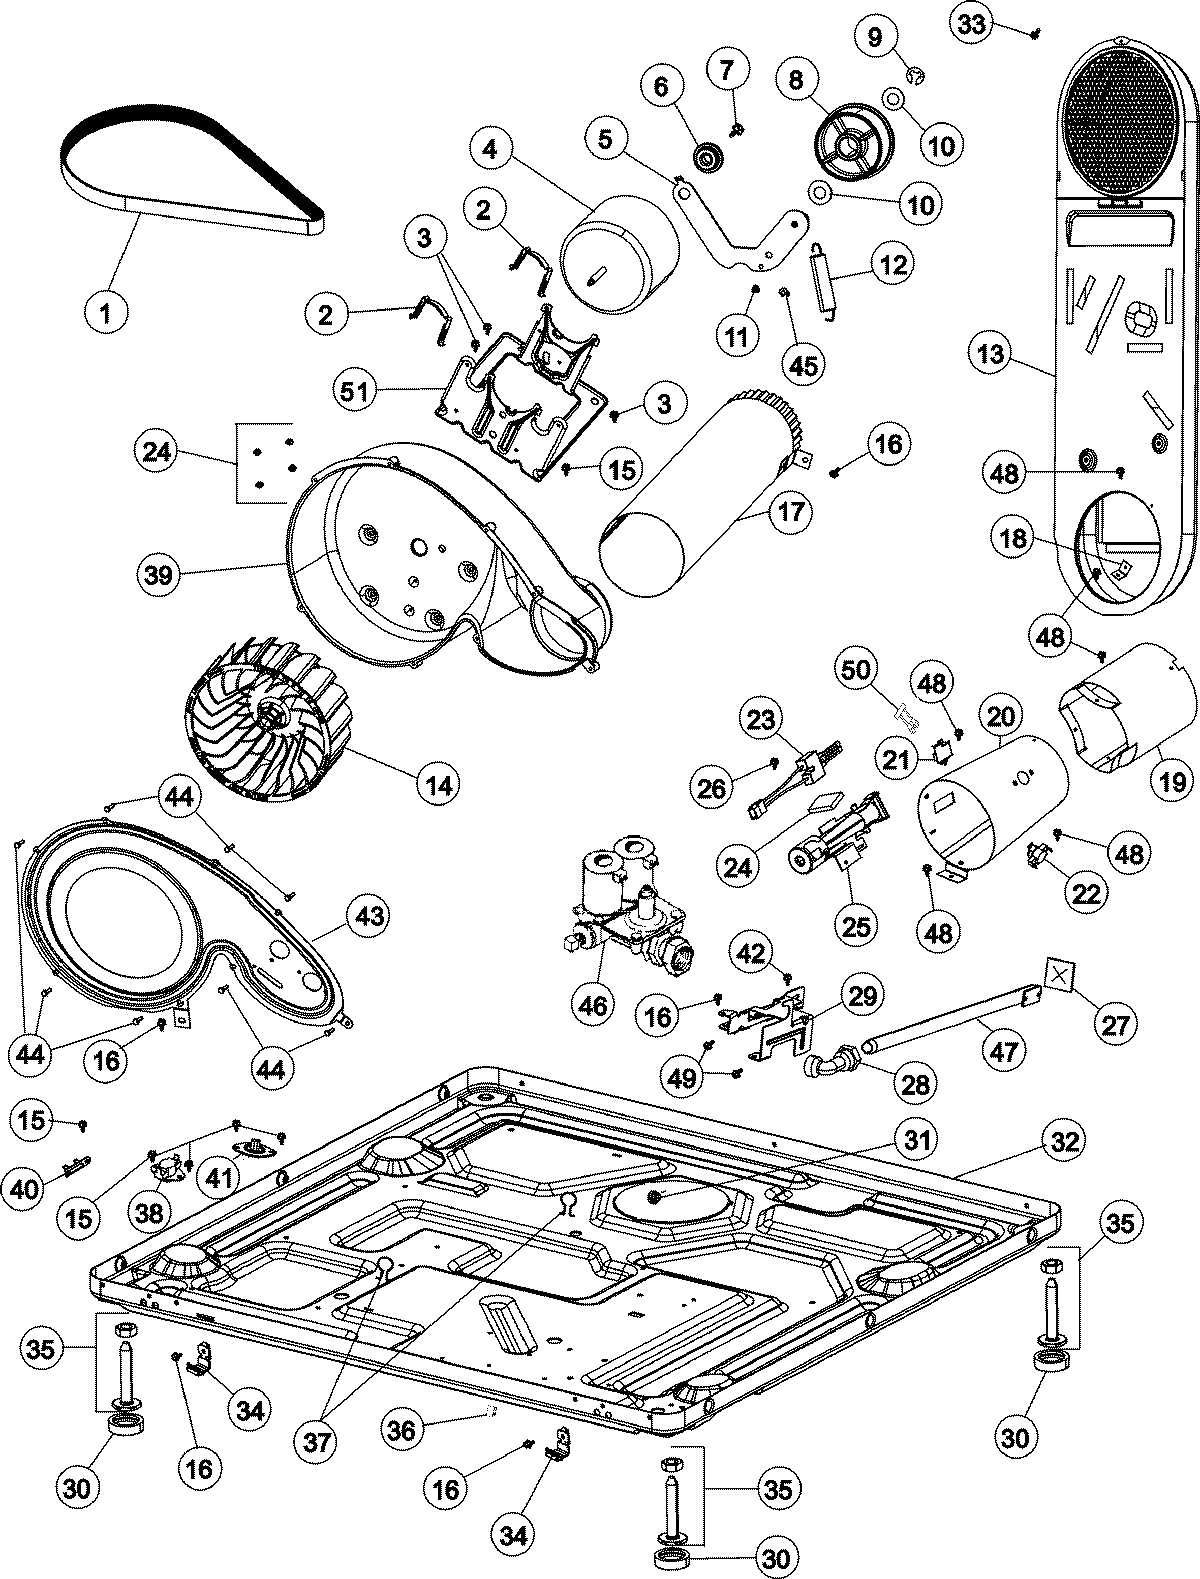 Maytag Dryer Parts